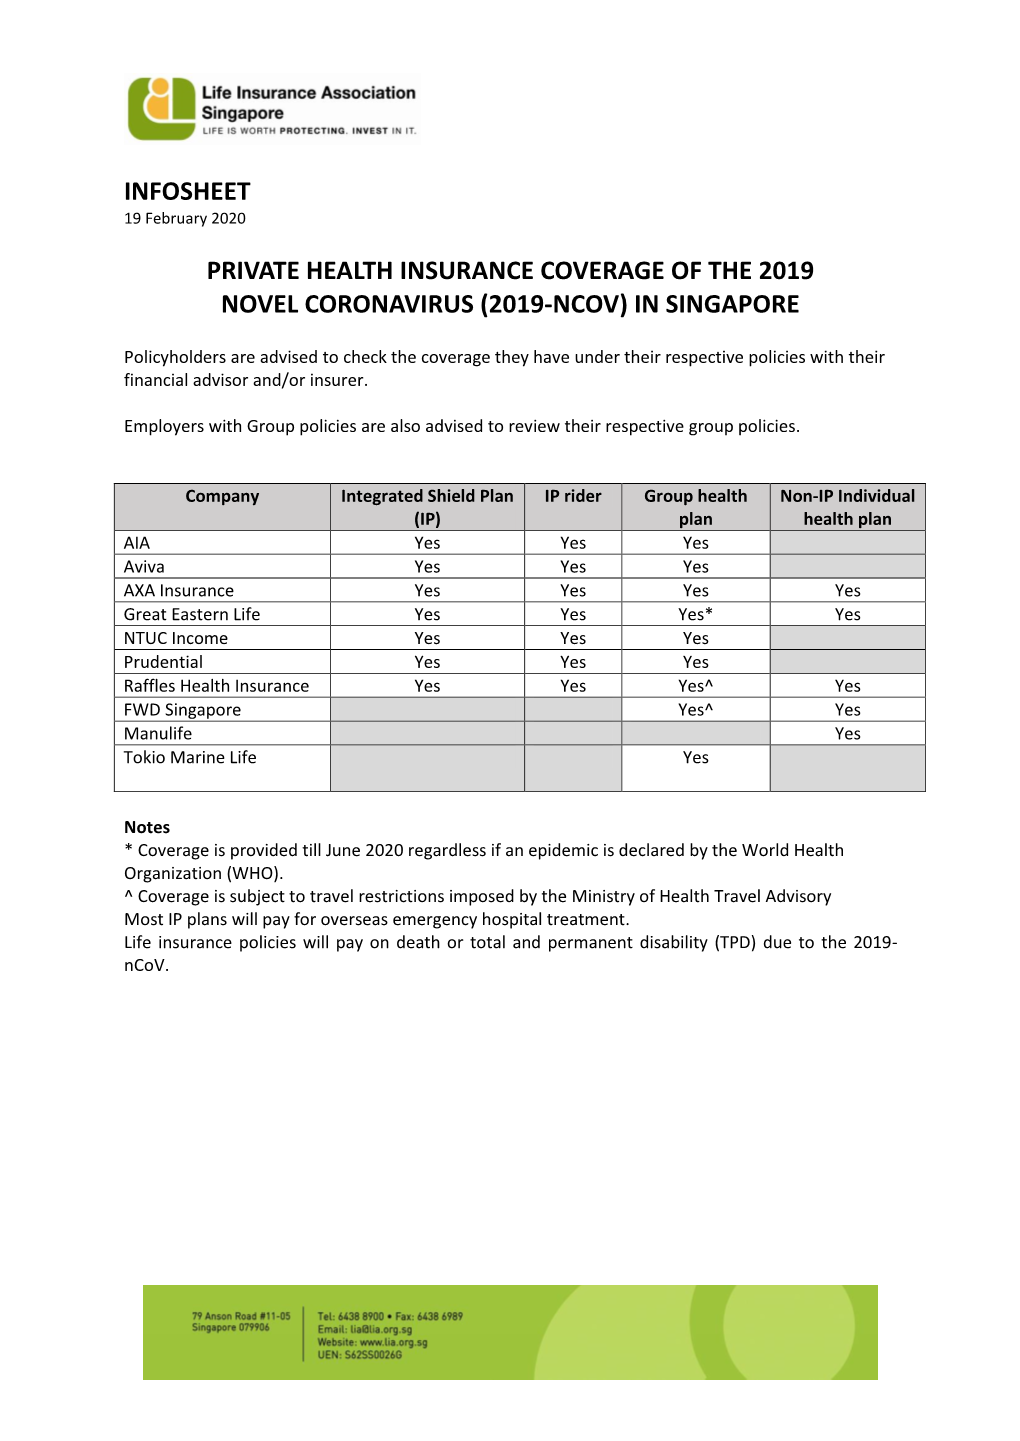 Private Health Insurance Coverage of the 2019 Novel Coronavirus (2019-Ncov) in Singapore